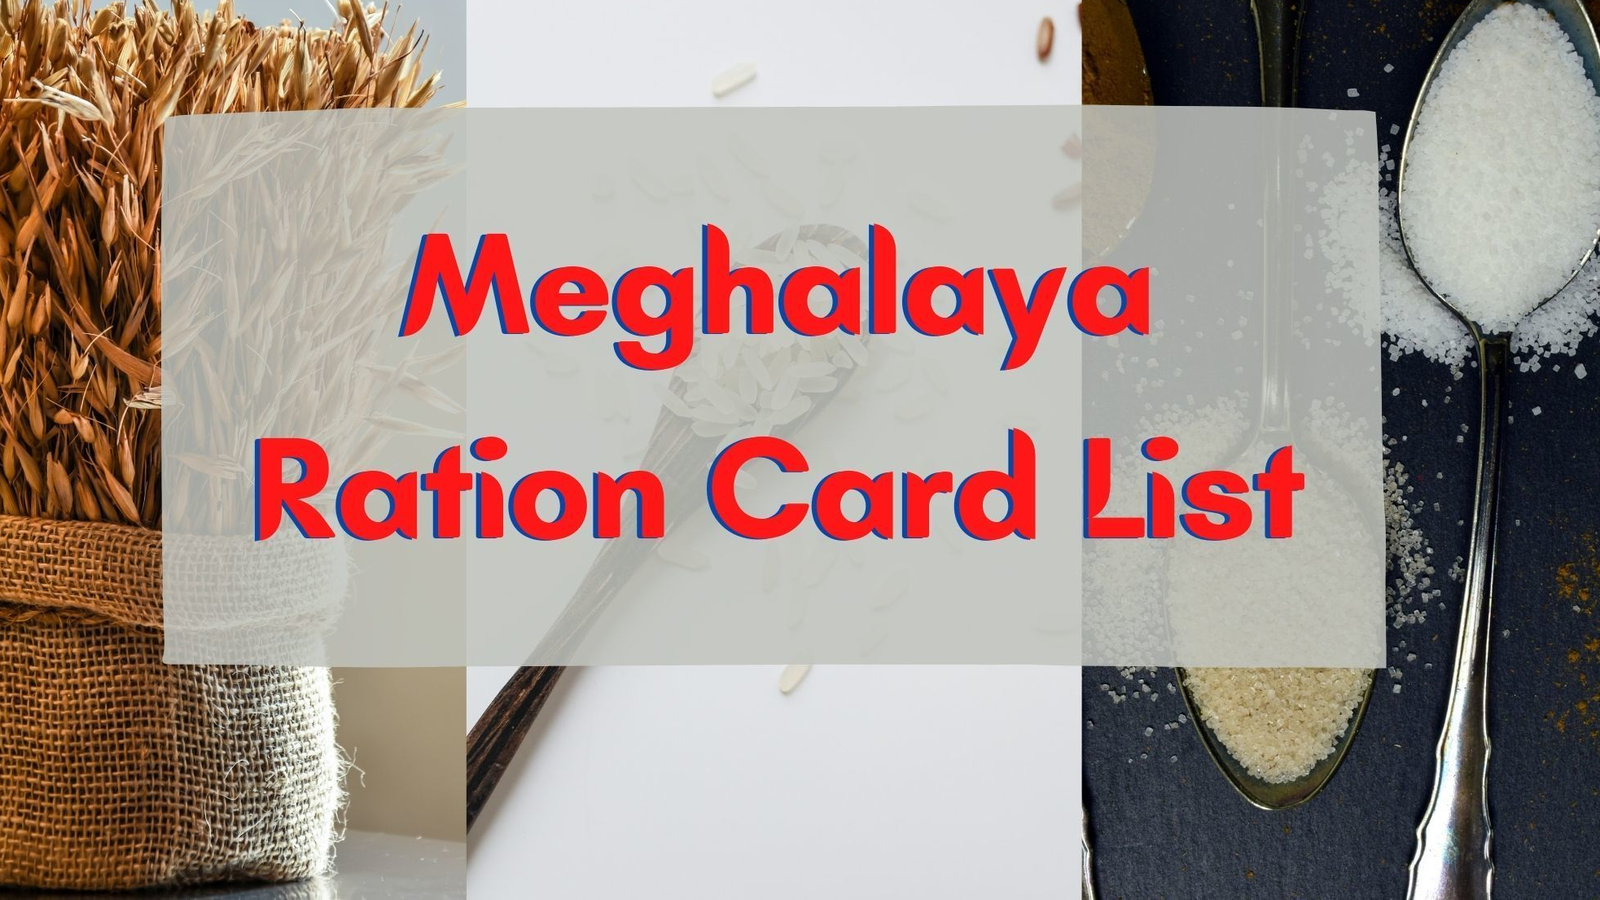 Meghalaya Ration Card List 